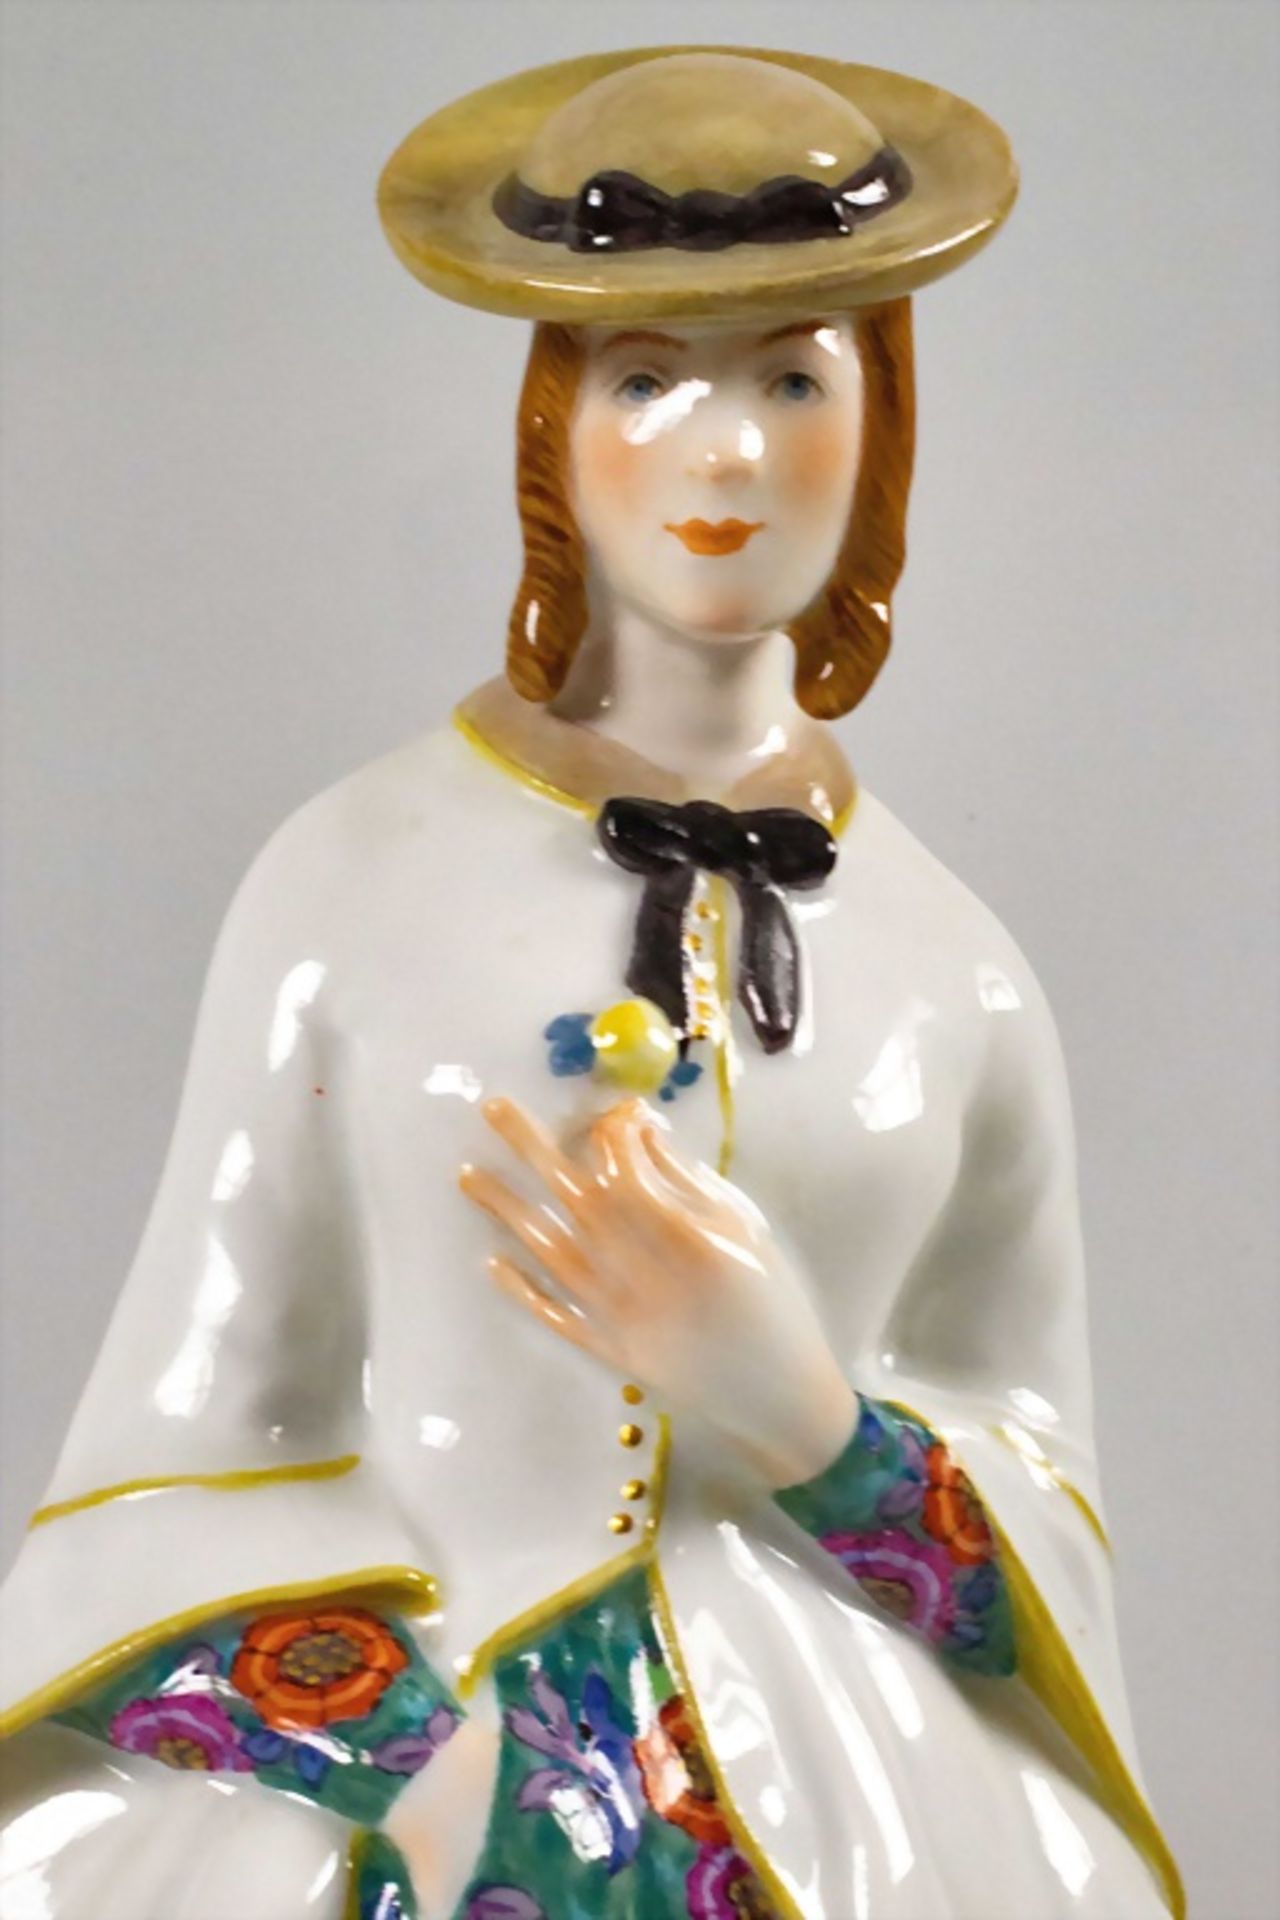 Jugendstil Figur 'Mädchen mit Rose' / An Art Nouveau figurine 'Girl with a rose'', Richard ... - Bild 9 aus 10